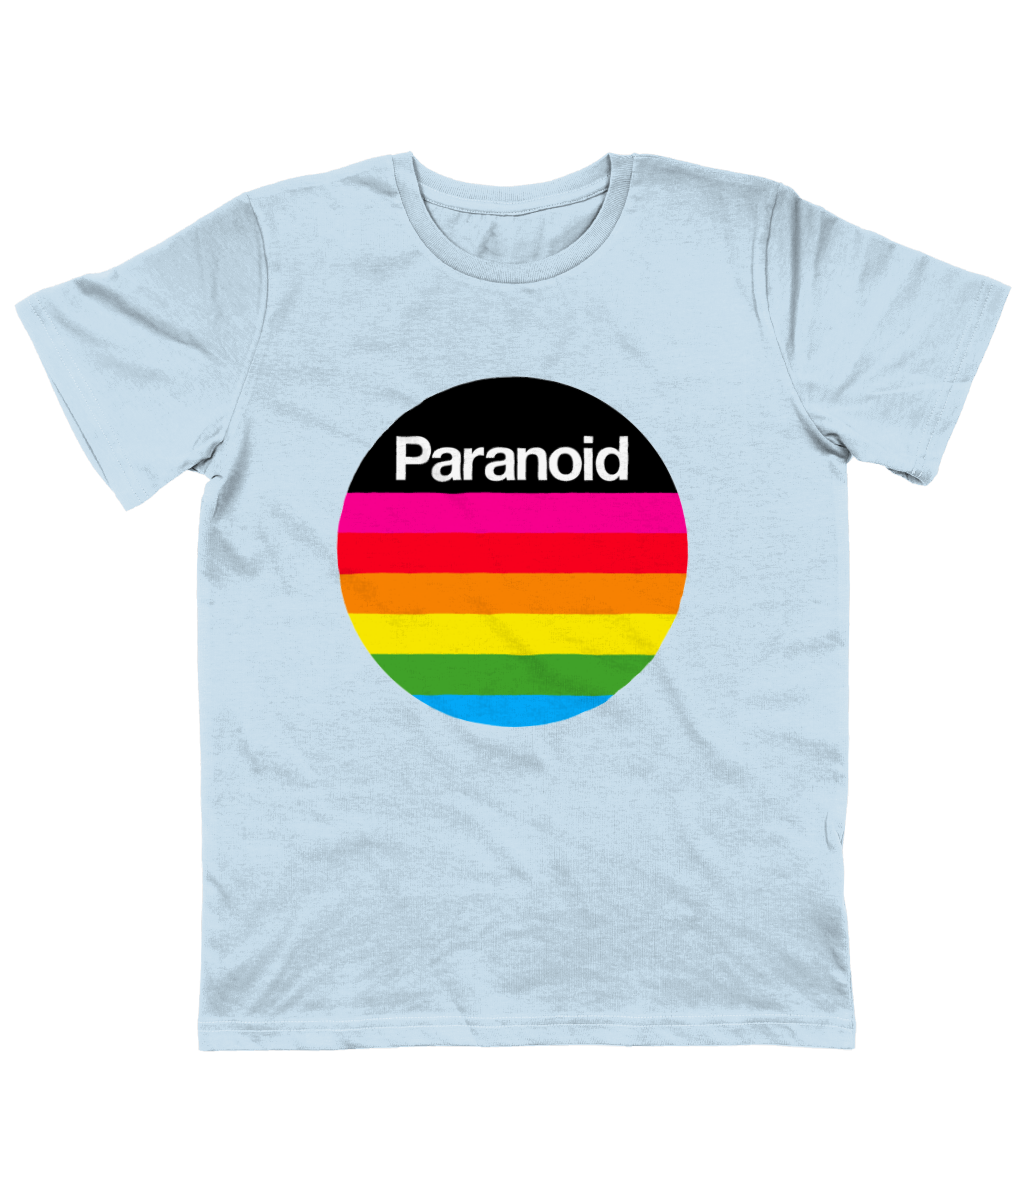 Paranoid - Kids